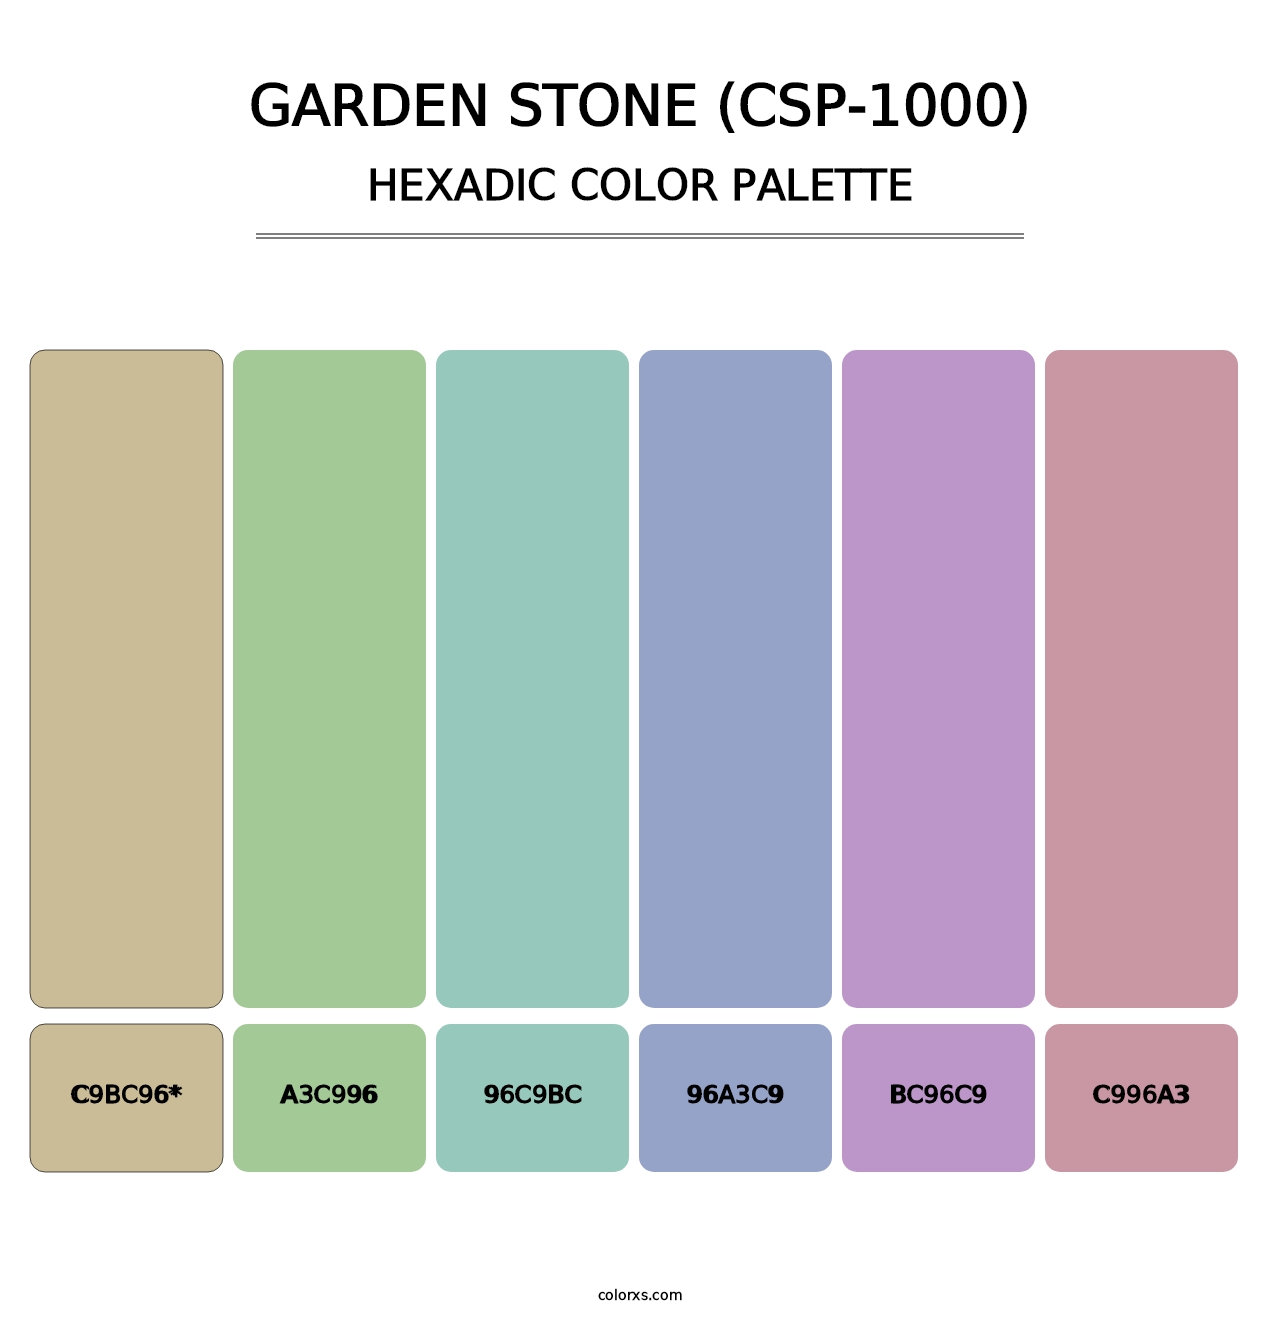 Garden Stone (CSP-1000) - Hexadic Color Palette